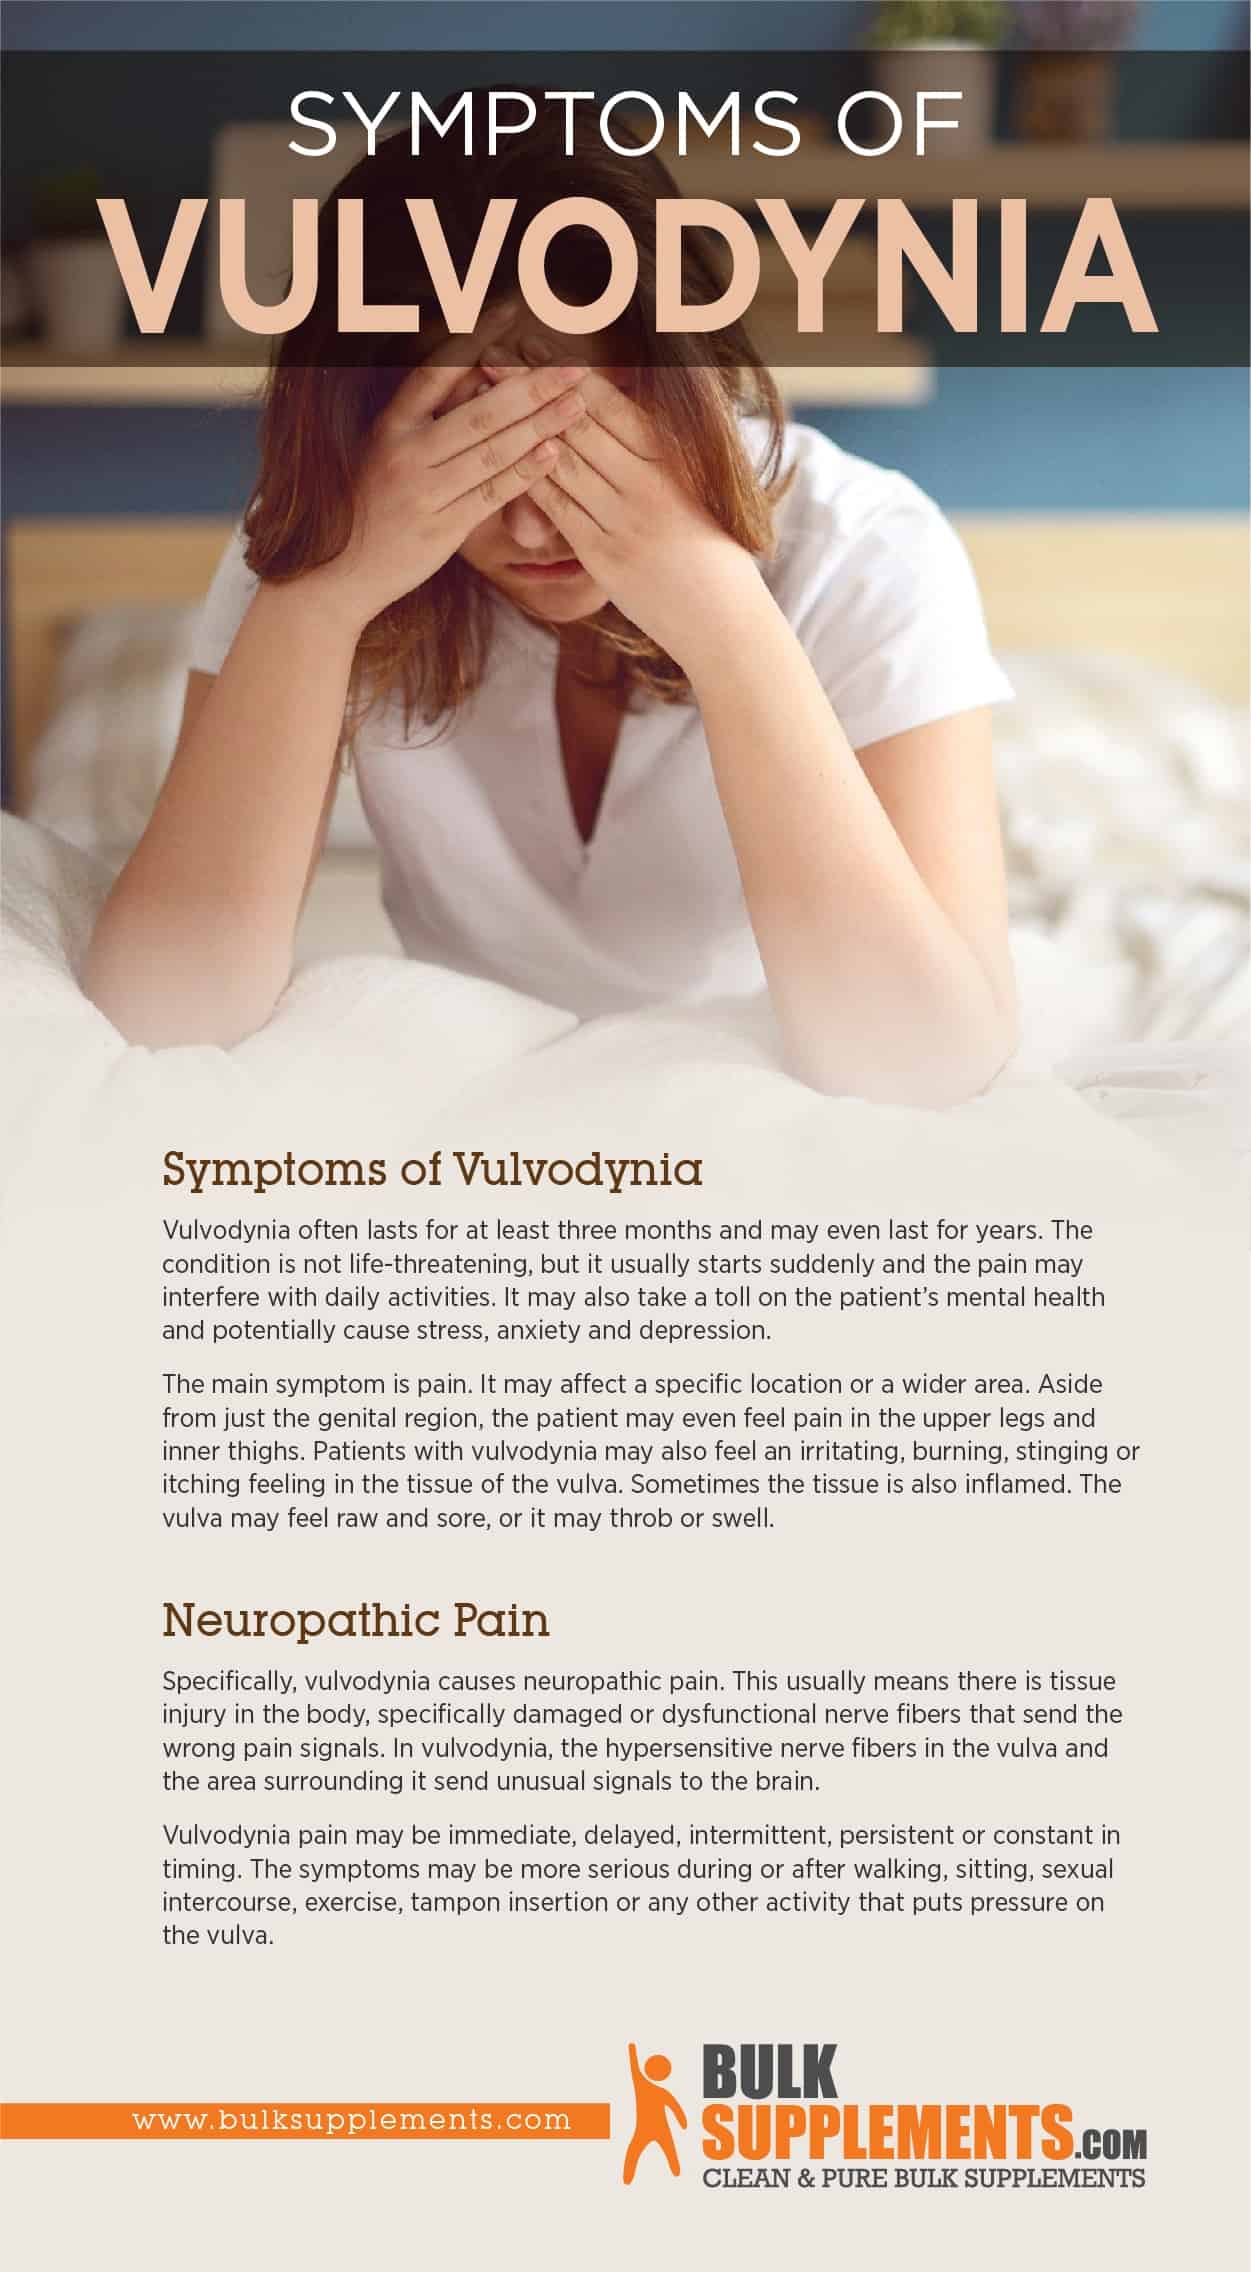 Symptoms of Vulvodynia